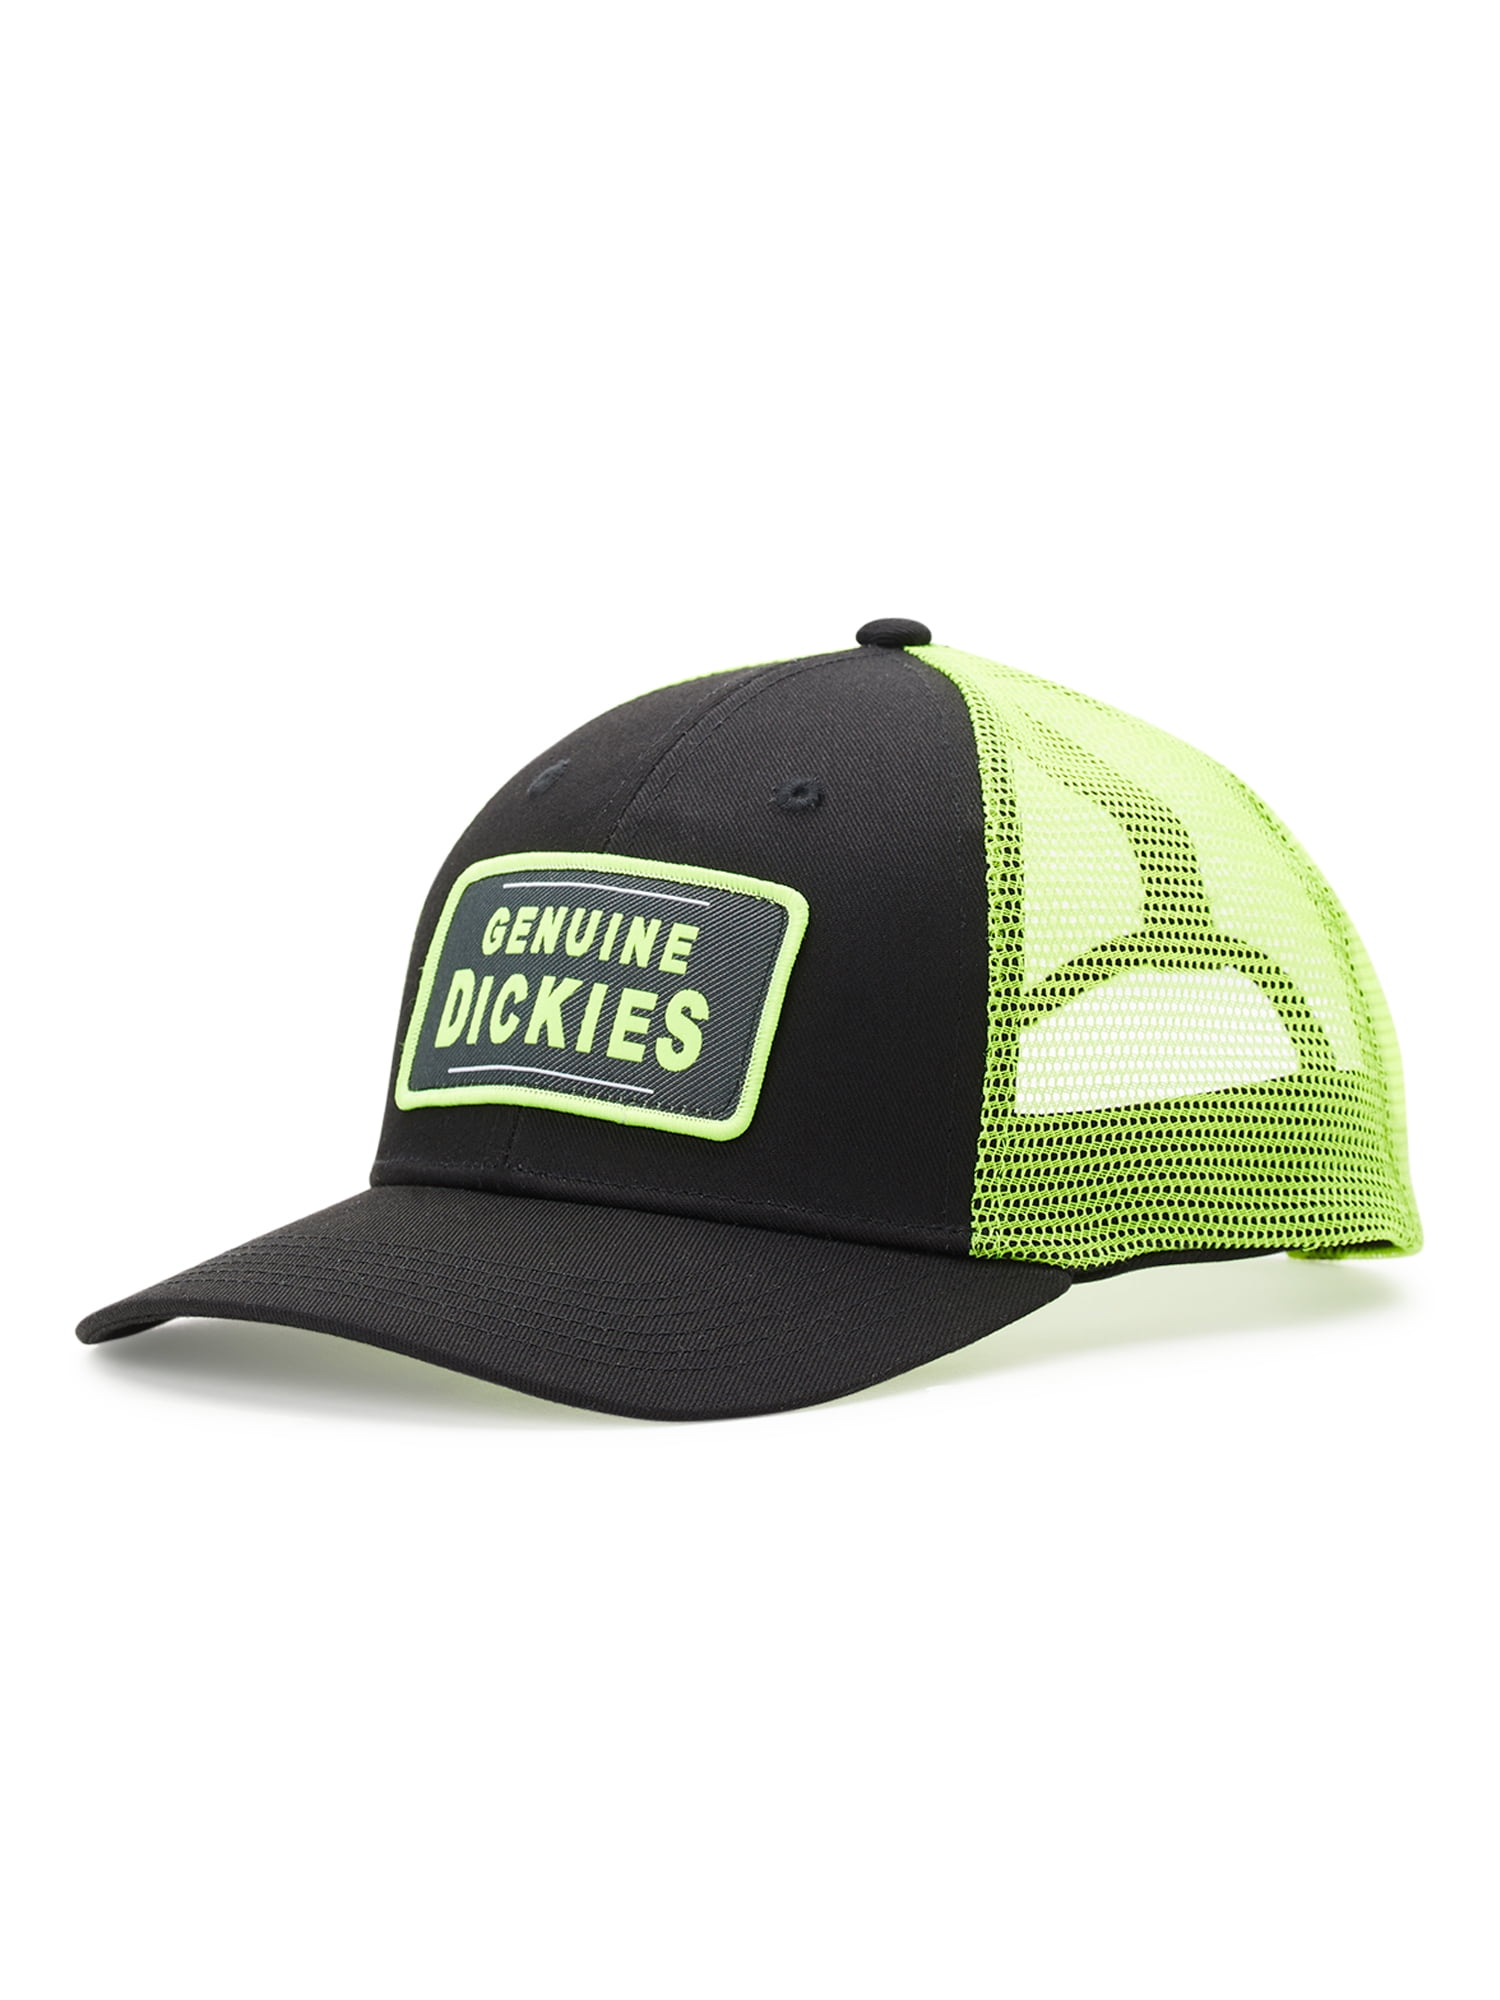 Genuine Dickies Men’s Trucker Cap